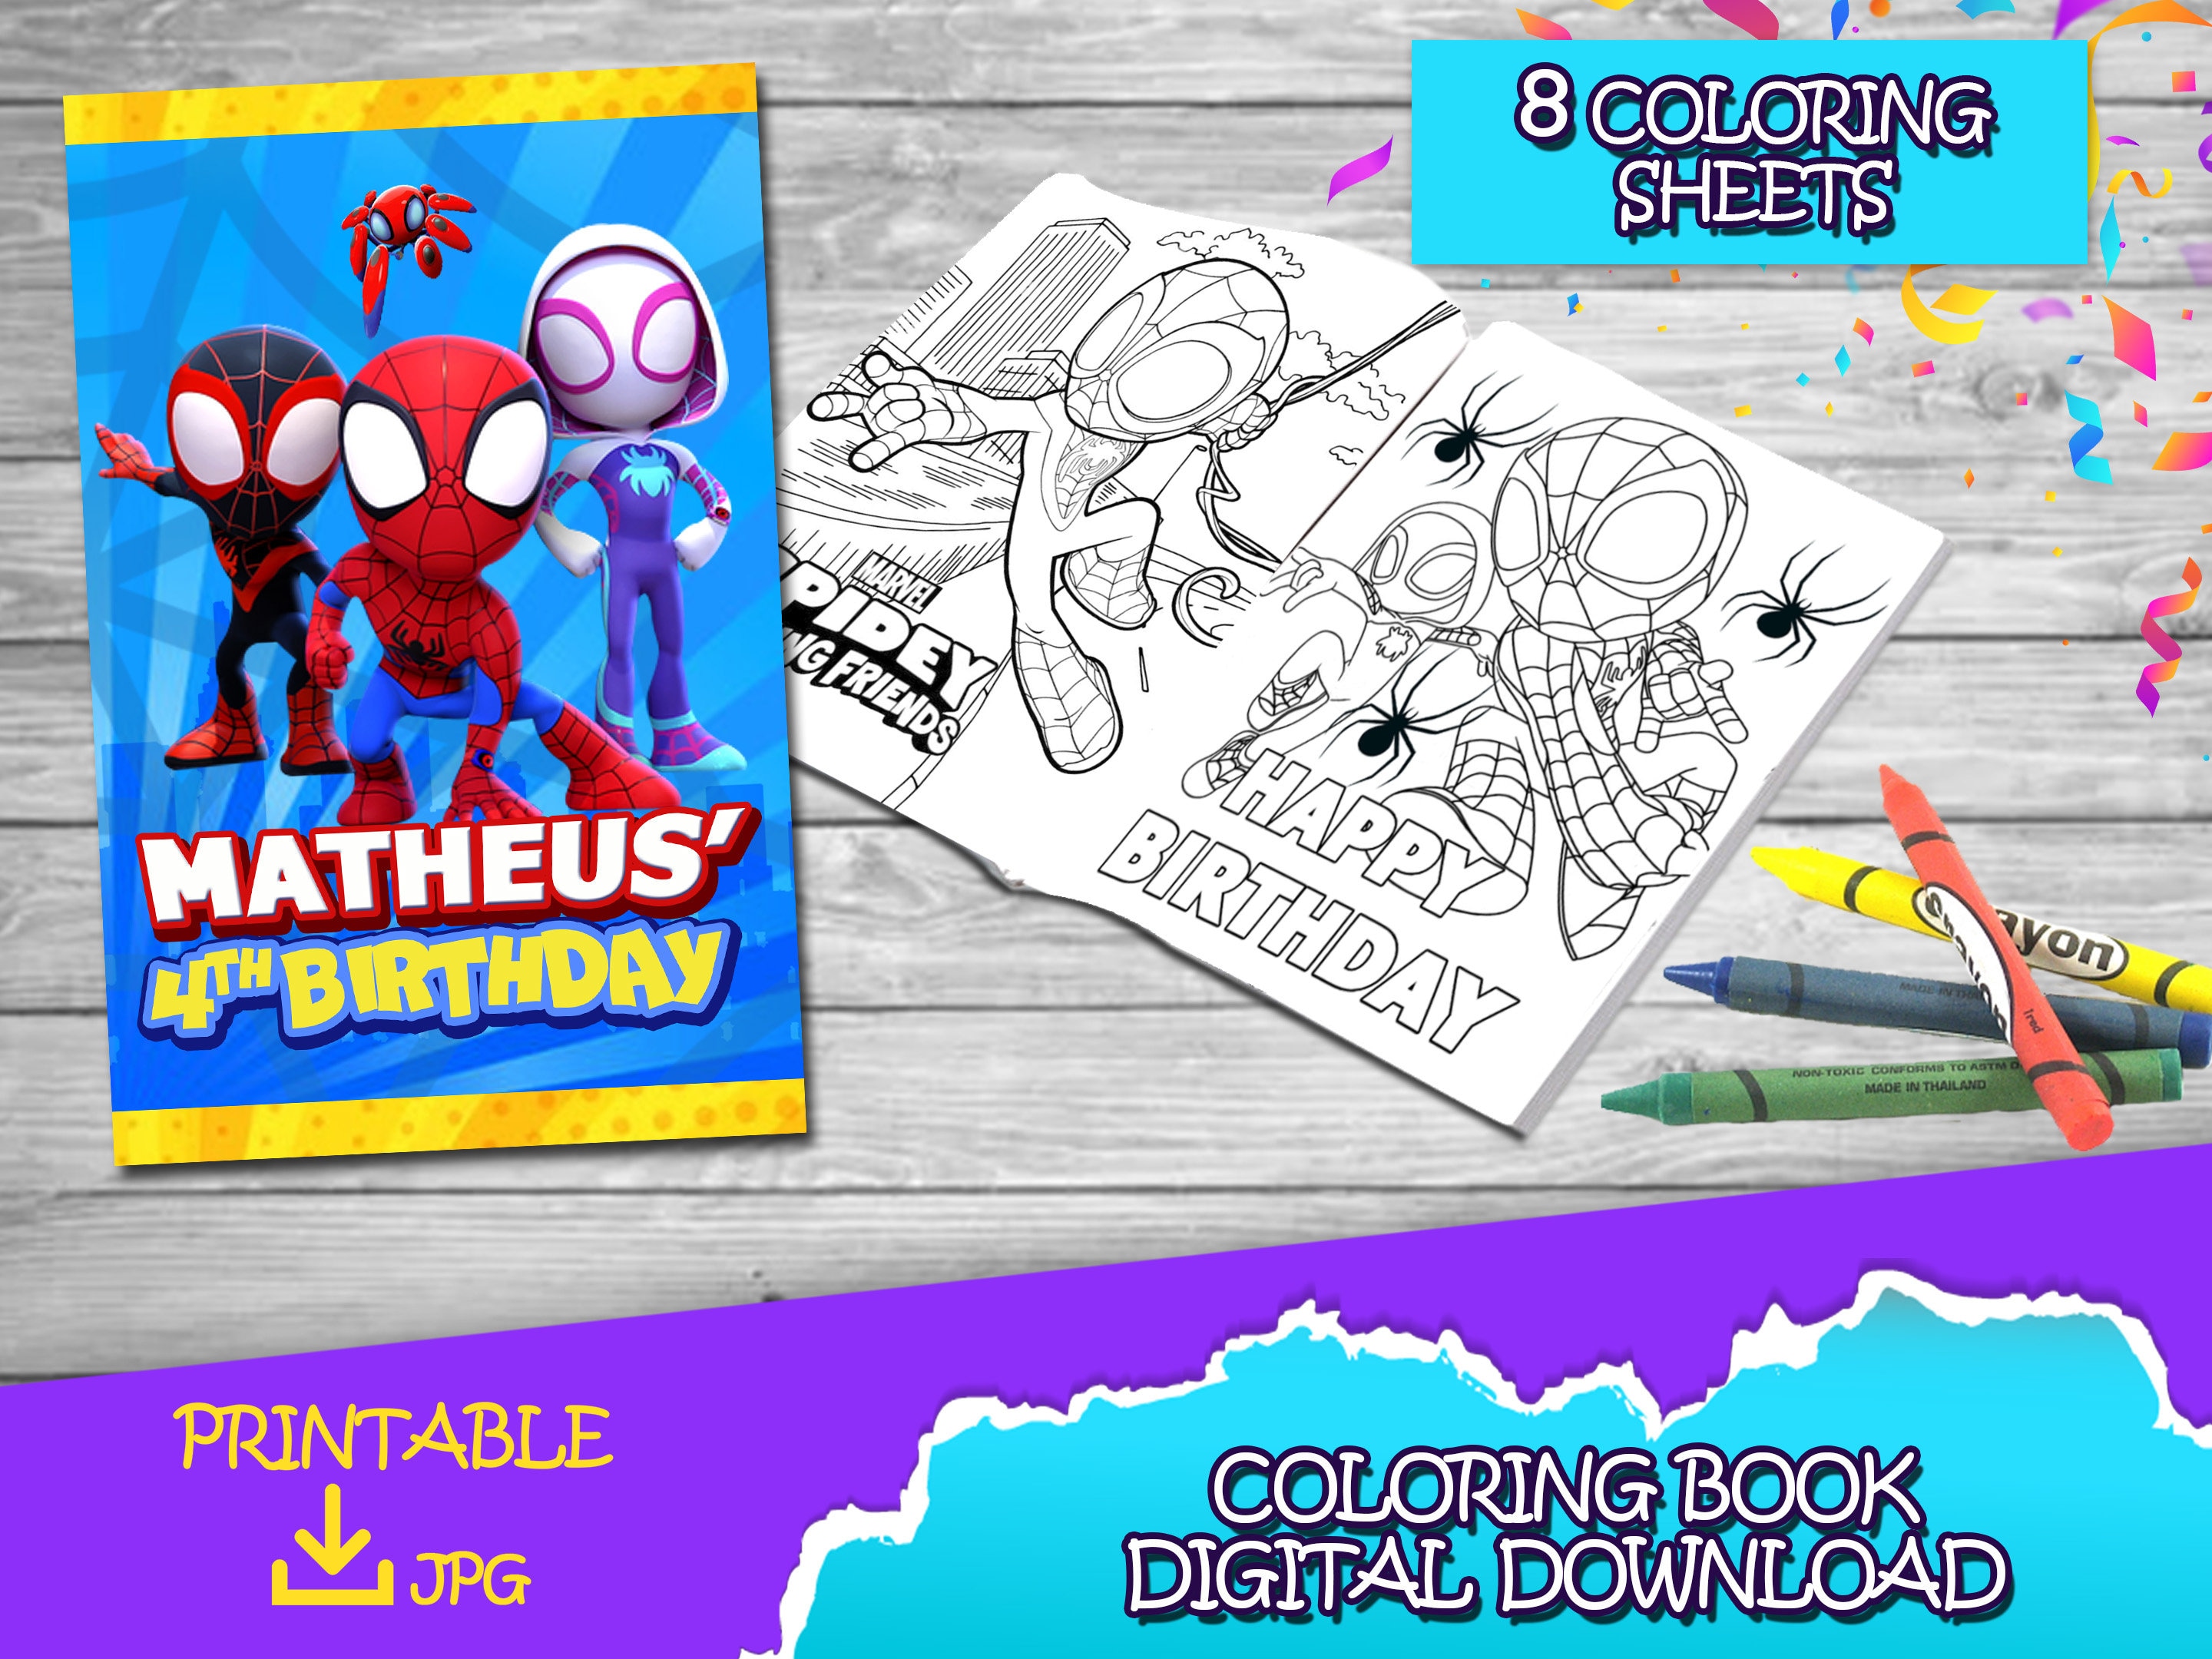 Spiderman coloring book page  Spiderman coloring, Coloring pages for kids,  Cinderella coloring pages